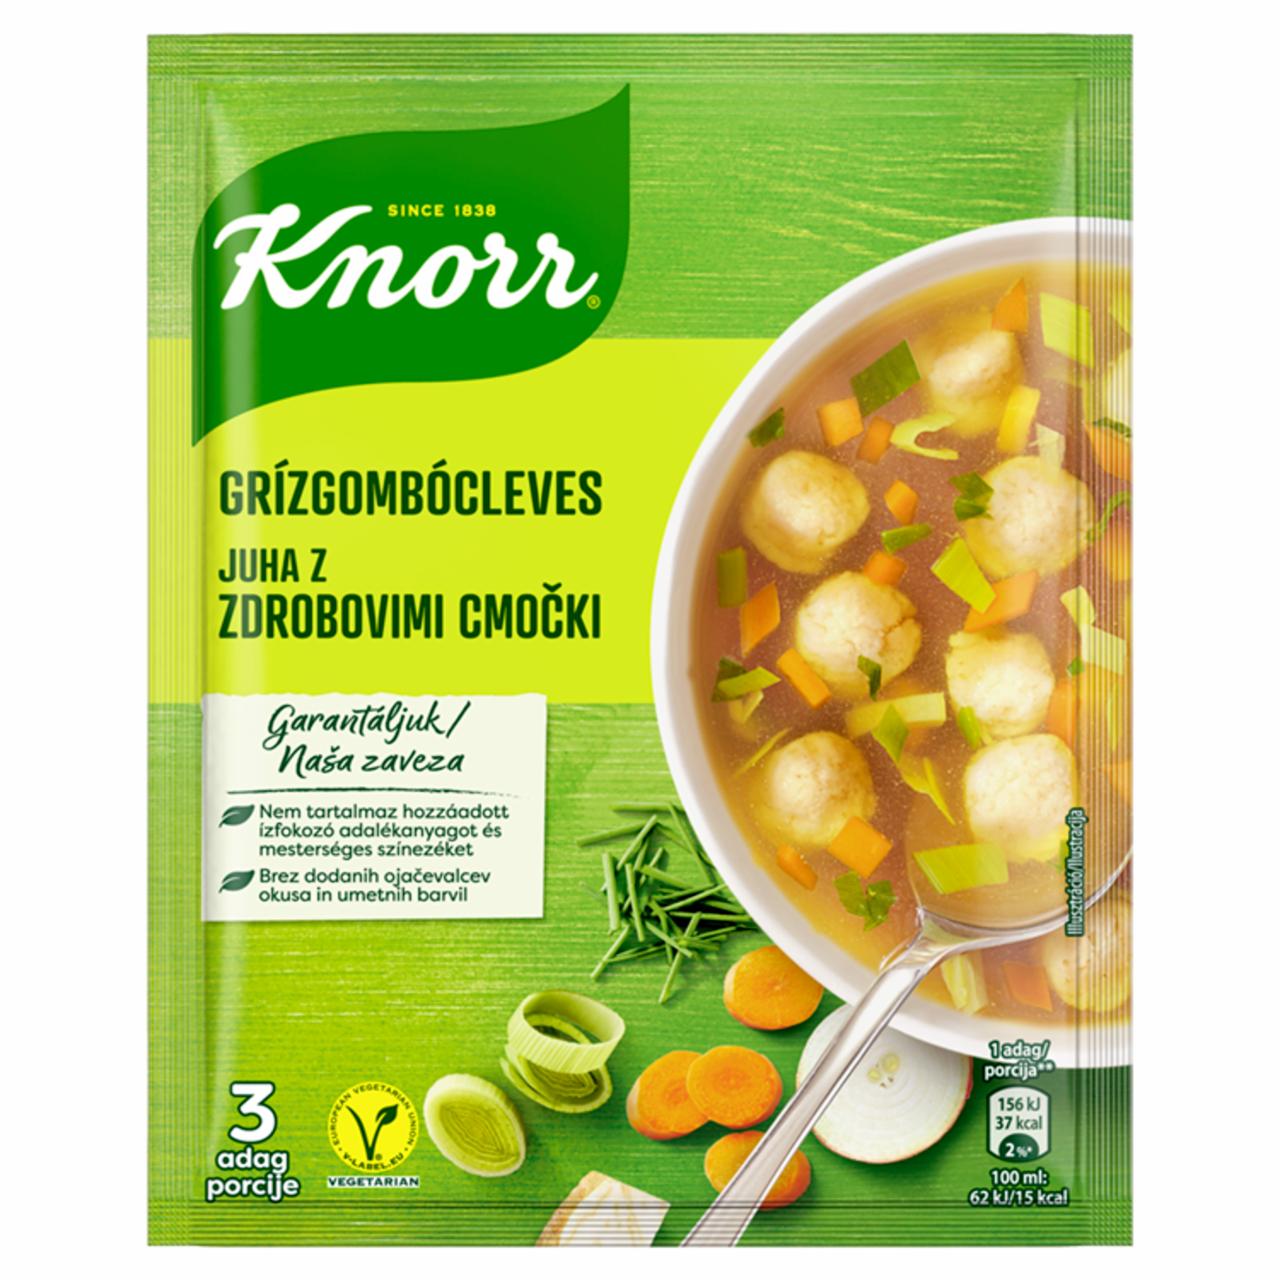 Képek - Knorr grízgombócleves 36 g